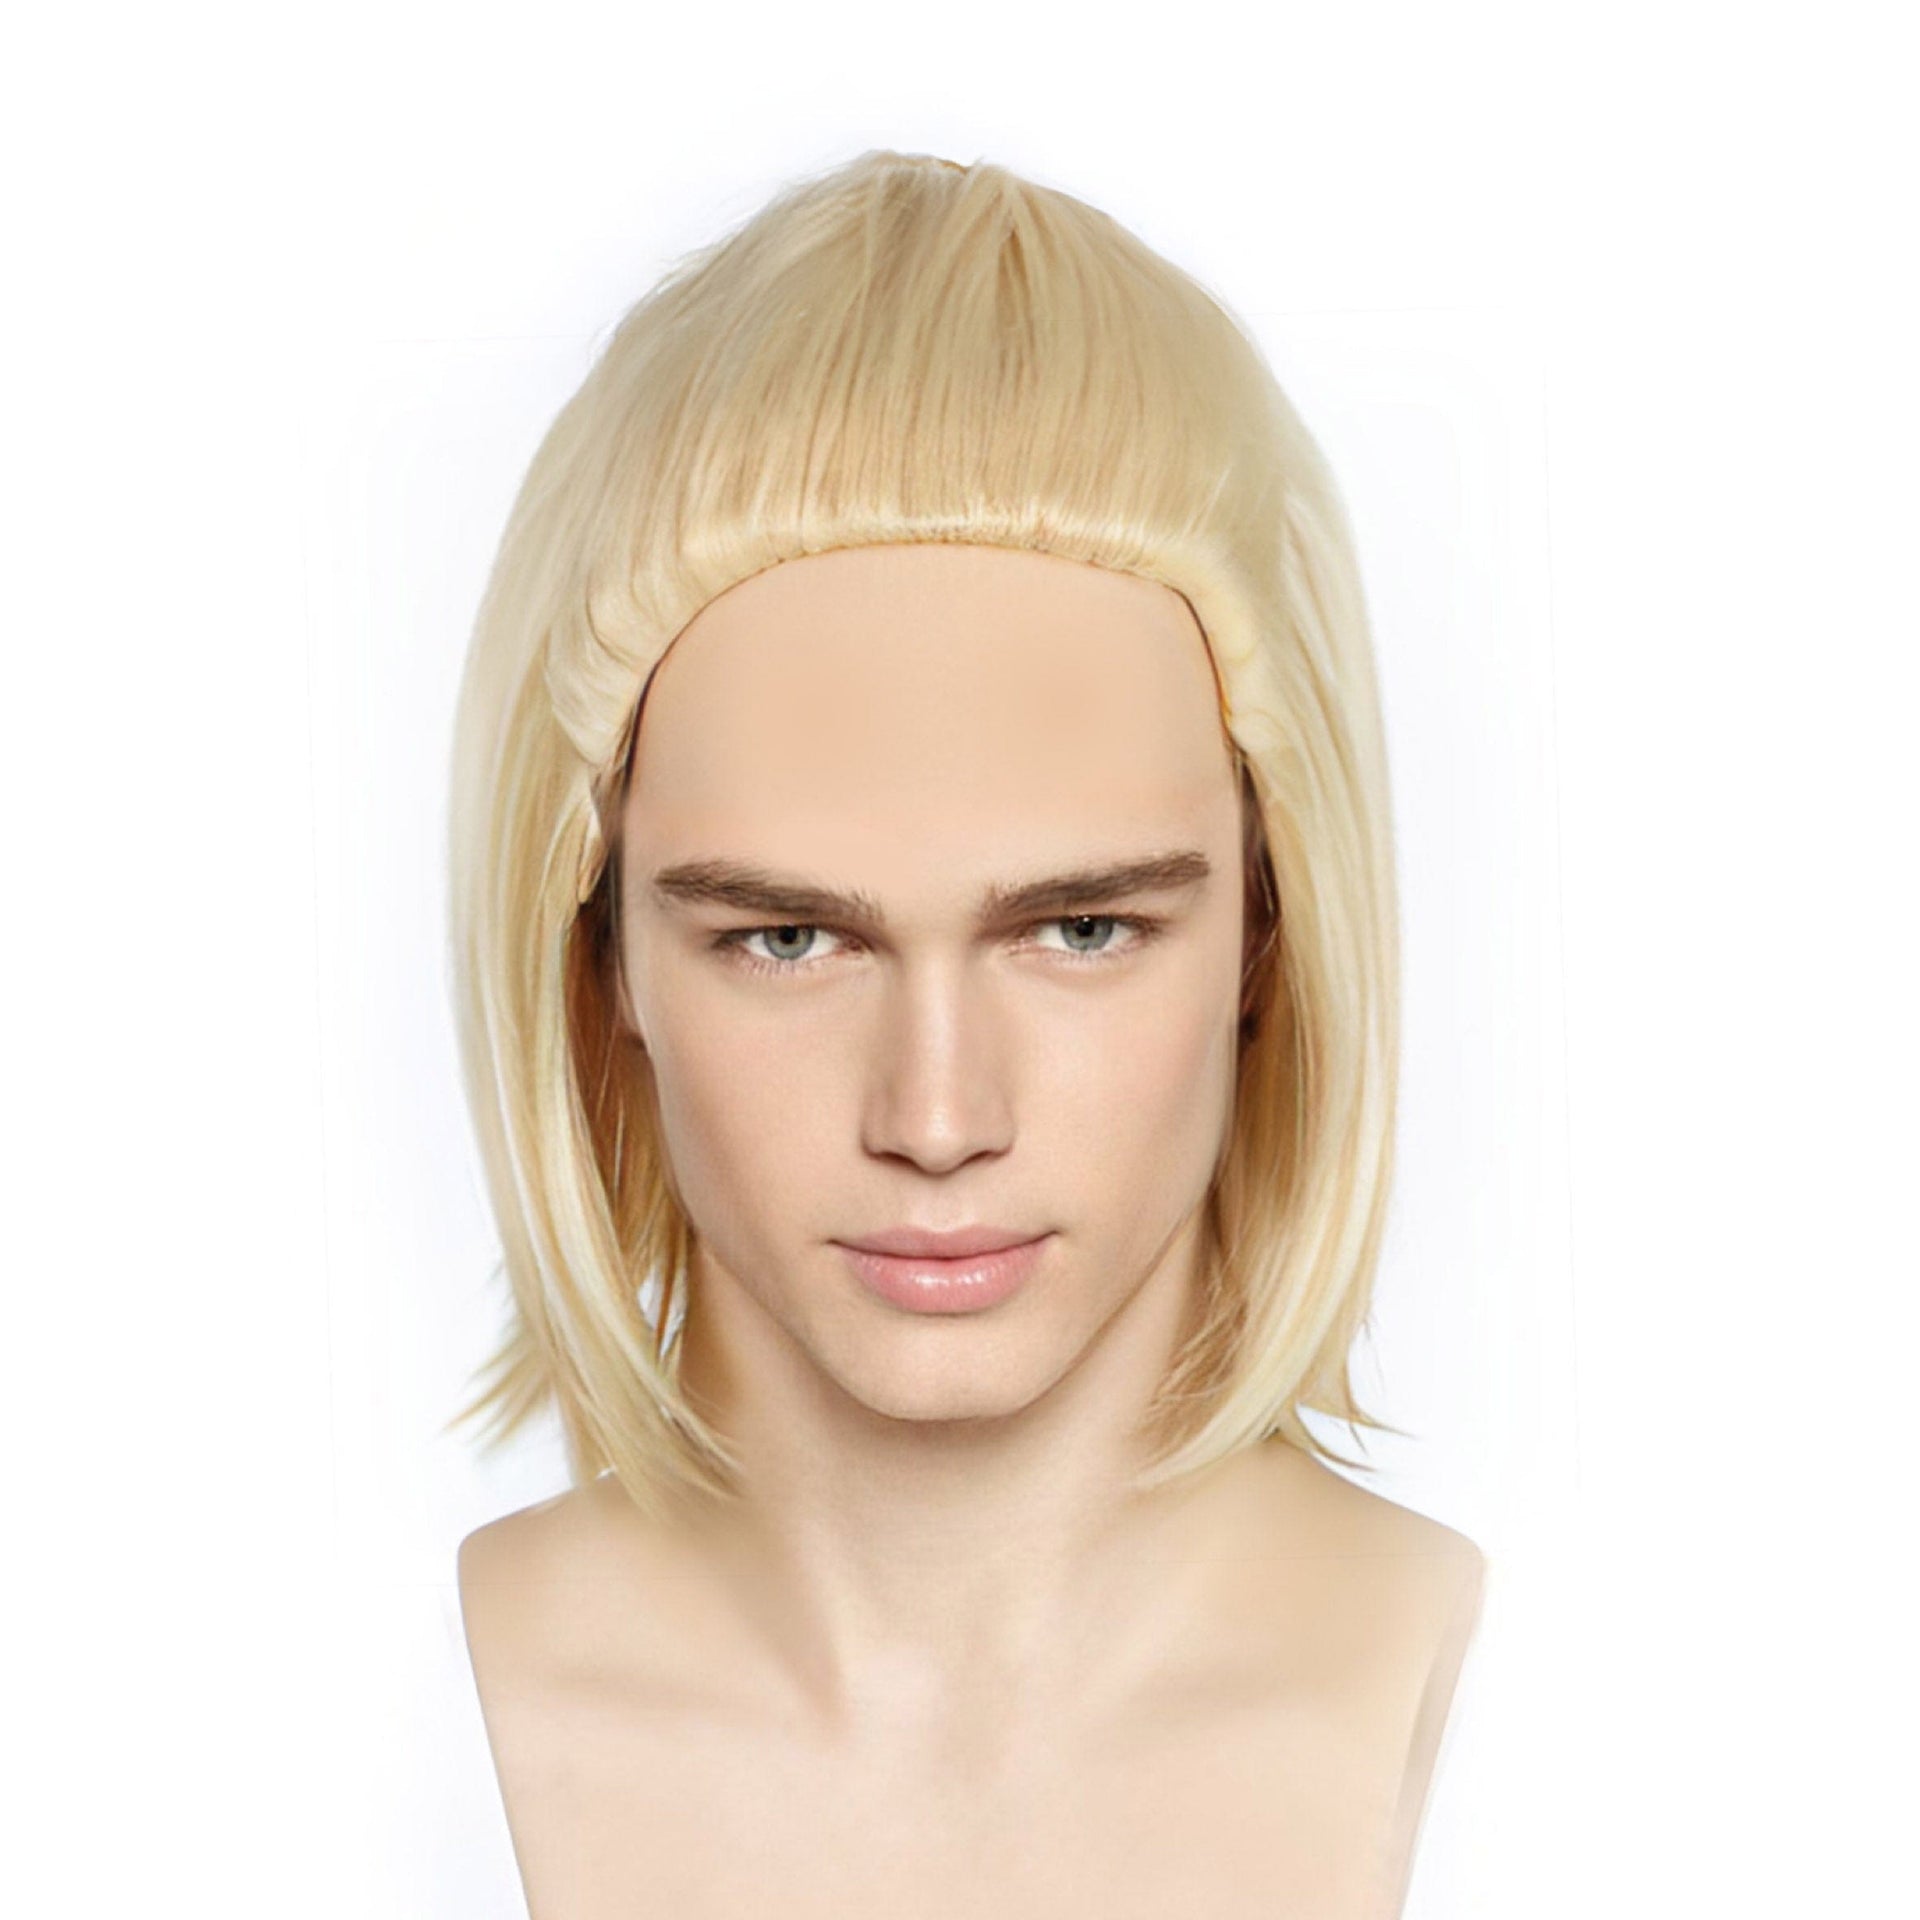 nevermindyrhead Men Blonde Short Straight Slicked Back Style Cosplay Wig